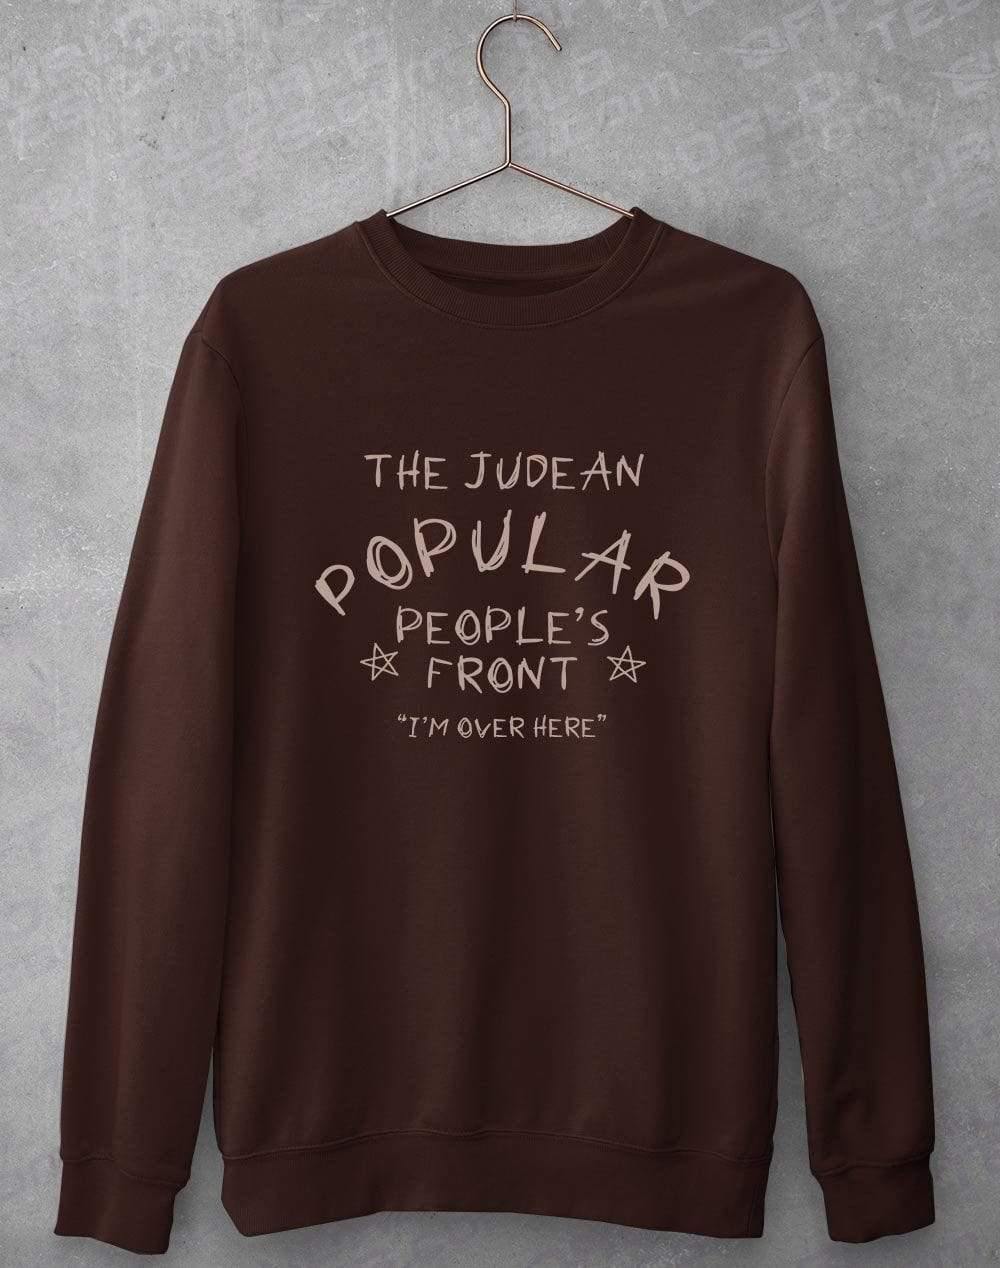 Judean Pupular Peoples Front Sweatshirt S / Chocolate  - Off World Tees